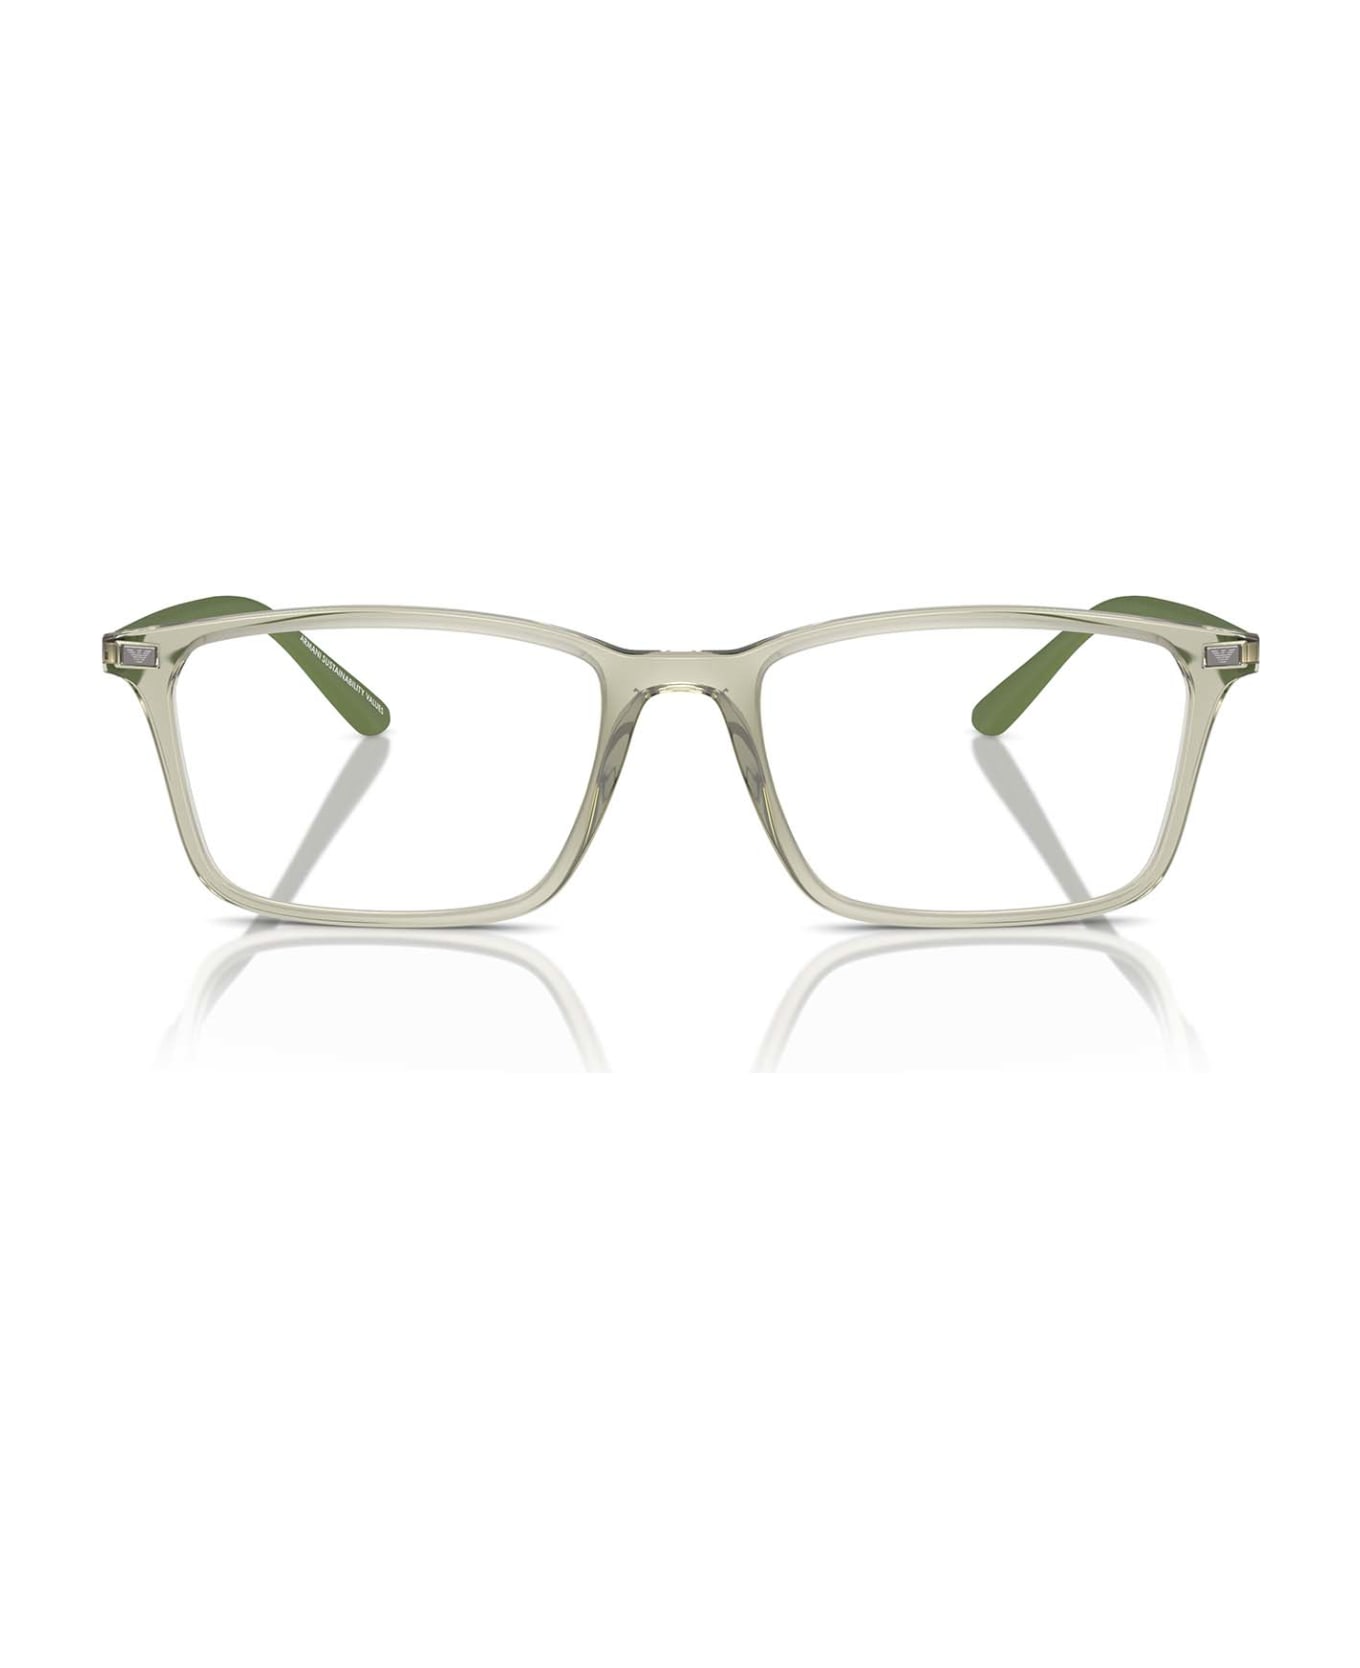 Emporio Armani Ea3237 Shiny Transparent Green Glasses - Shiny Transparent Green アイウェア